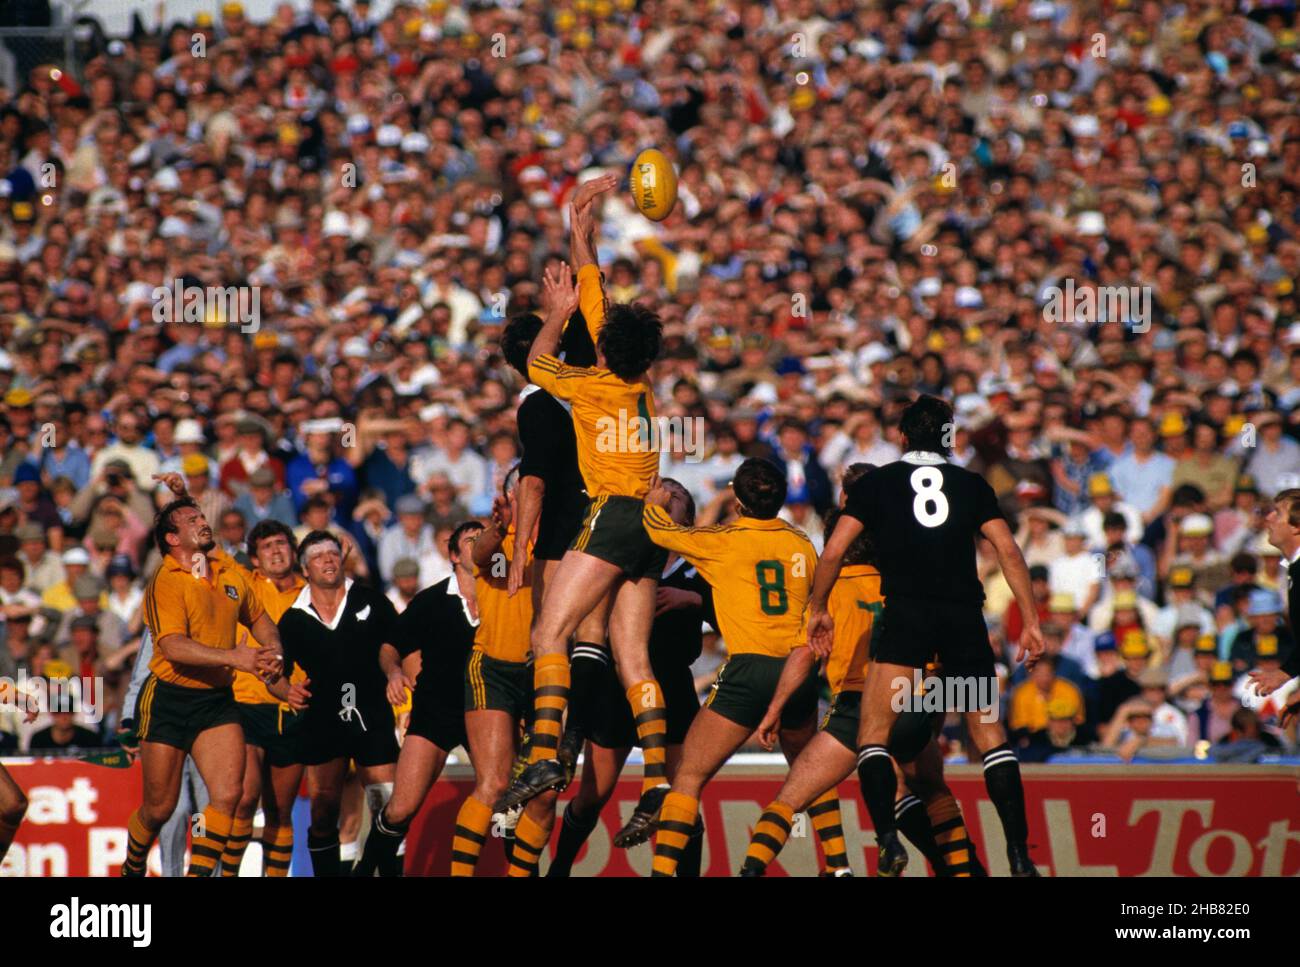 Rugby Union Football. New Zealand All Blacks contro i wallaby australiani. Foto Stock